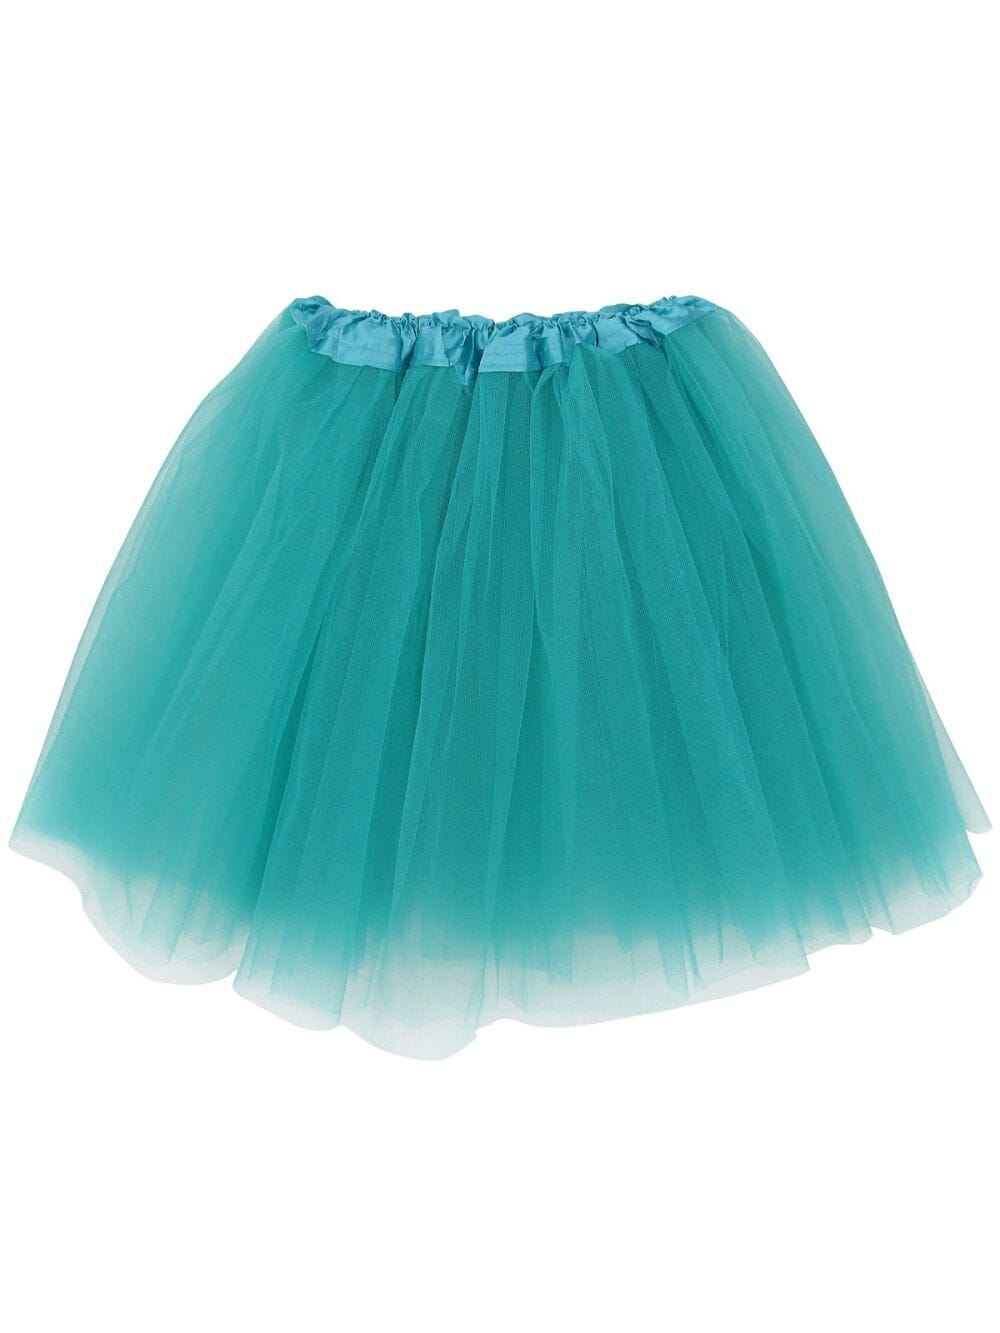 Turquoise Green Adult Tutu Skirt - Women's Size 3-Layer Basic Ballet Costume Dance Tutus - Sydney So Sweet